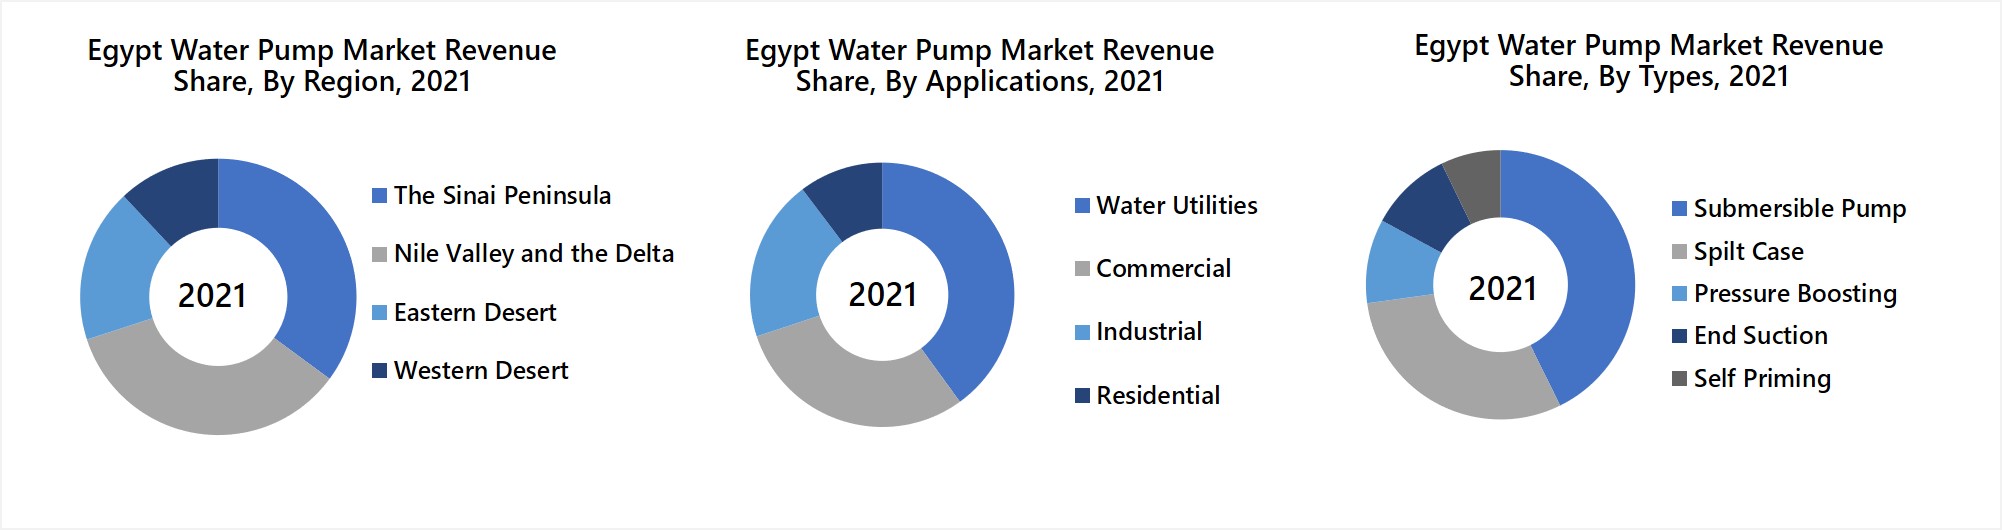 Egypt Water Pump Market Revenue Share